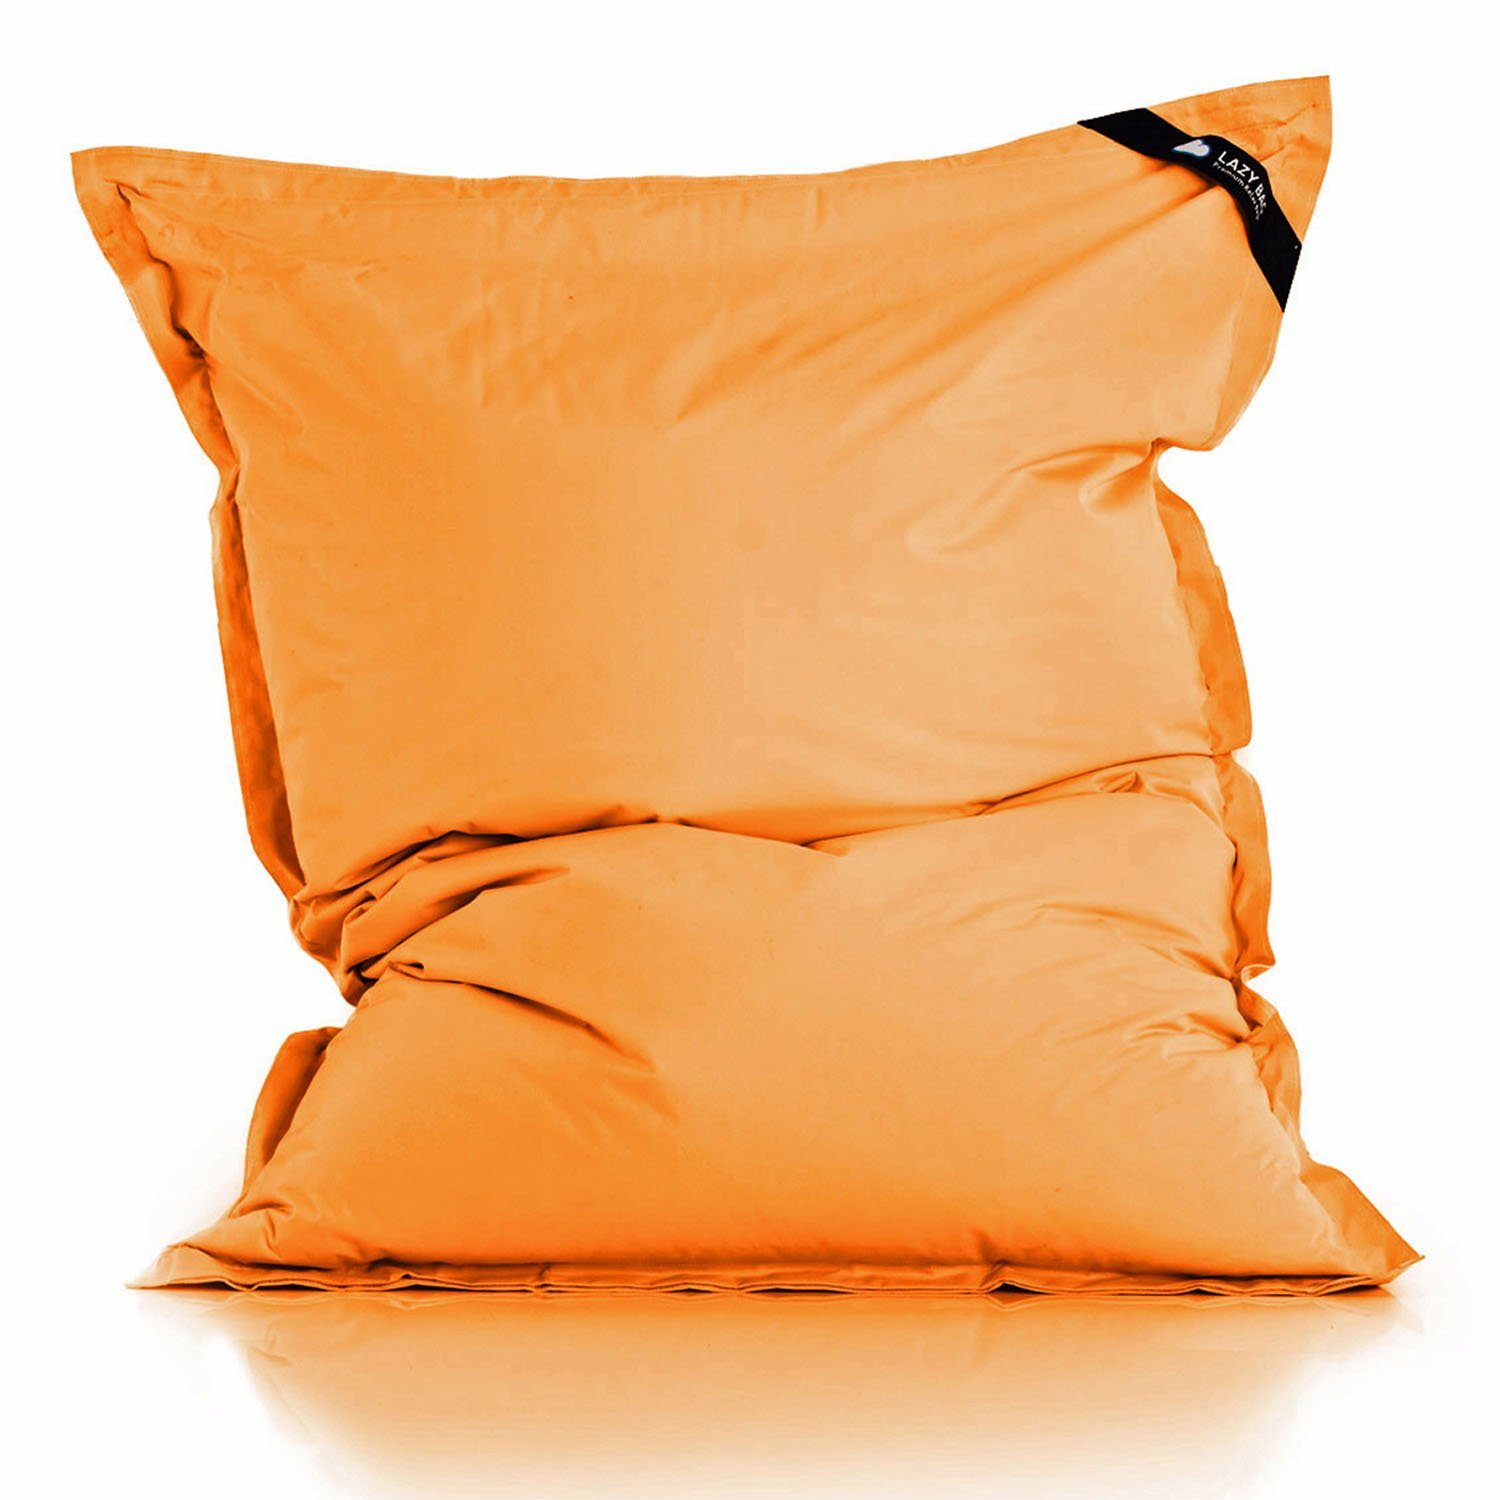 LazyBag Sitzsack Original Indoor & Outdoor Bean-Bag (XL 250 Liter, Riesensitzsack), Junior-Sitzkissen Sessel Orange